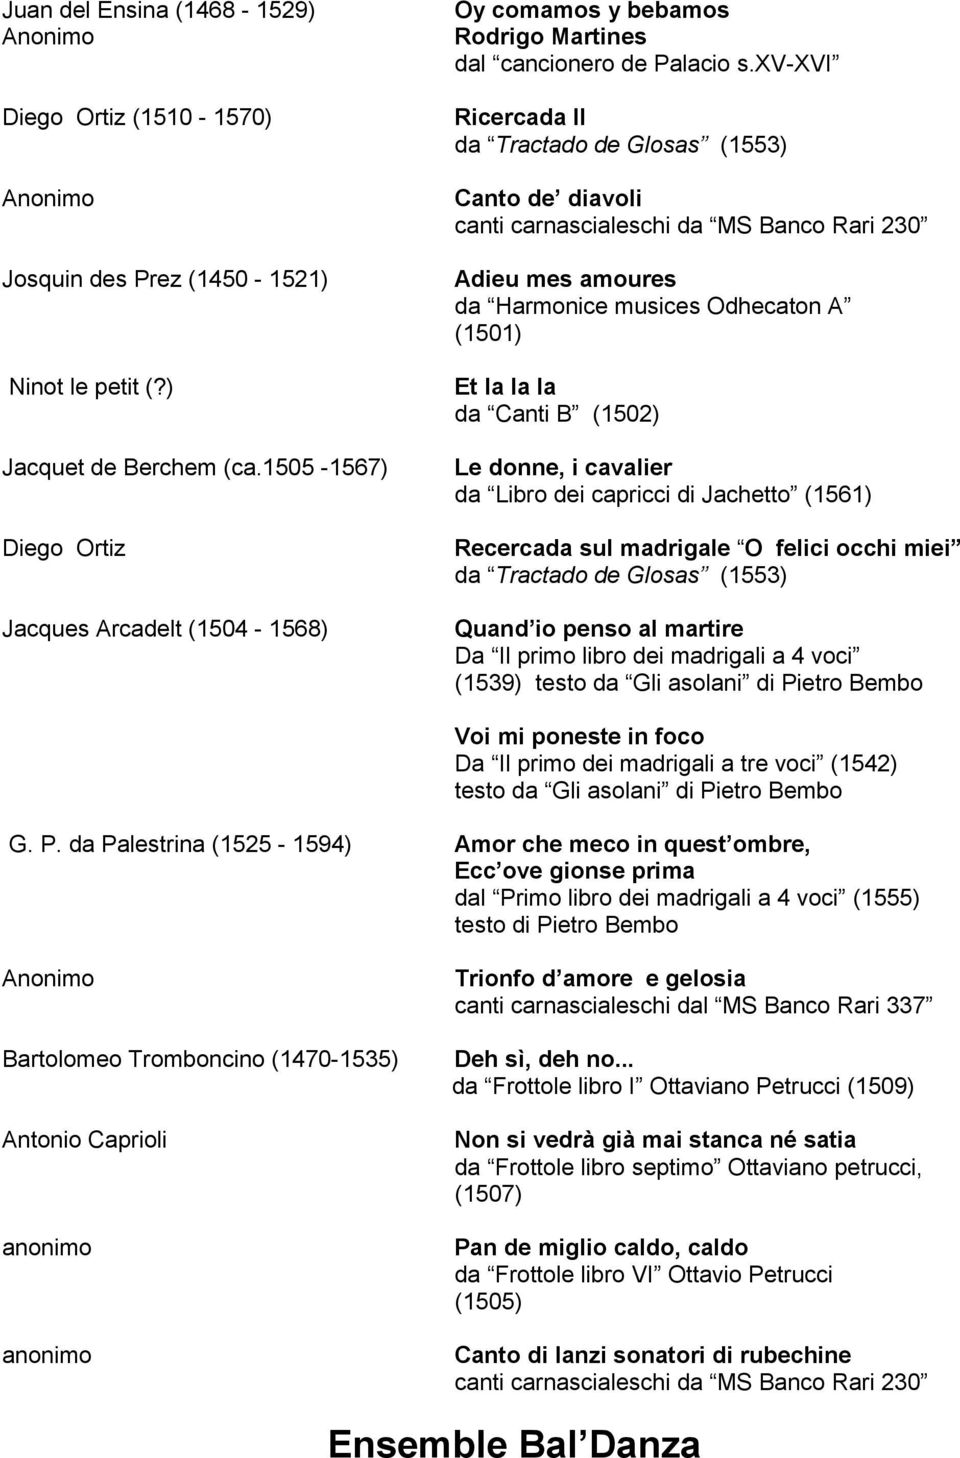 xv-xvi Ricercada II da Tractado de Glosas (1553) Canto de diavoli canti carnascialeschi da MS Banco Rari 230 Adieu mes amoures da Harmonice musices Odhecaton A (1501) Et la la la da Canti B (1502) Le